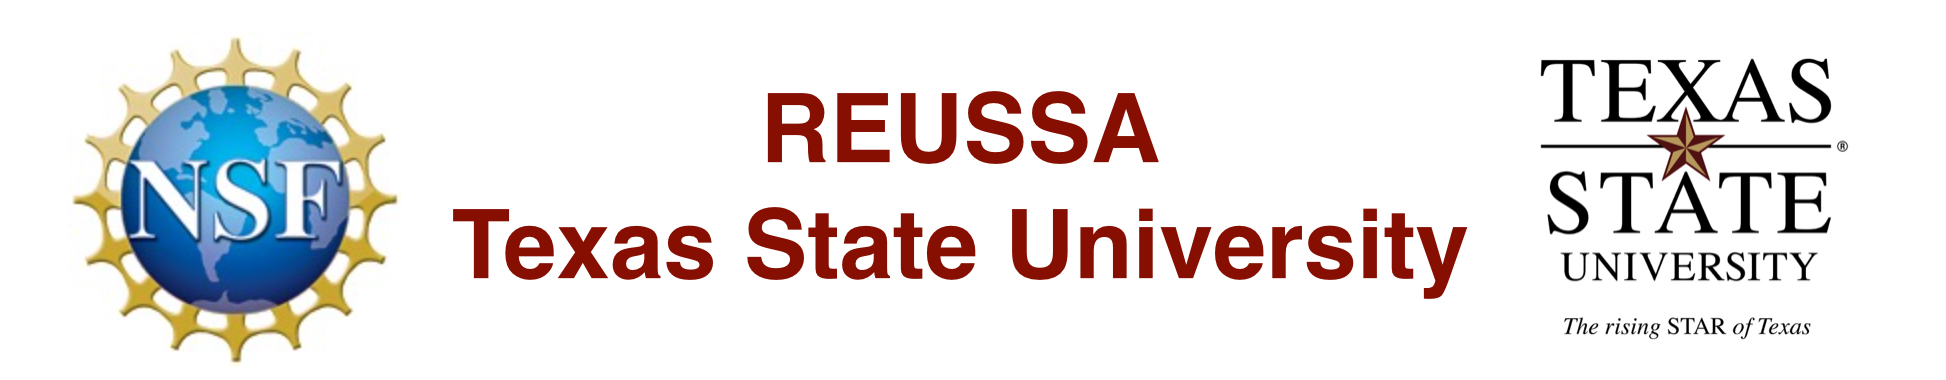 REUSSA at Texas State University